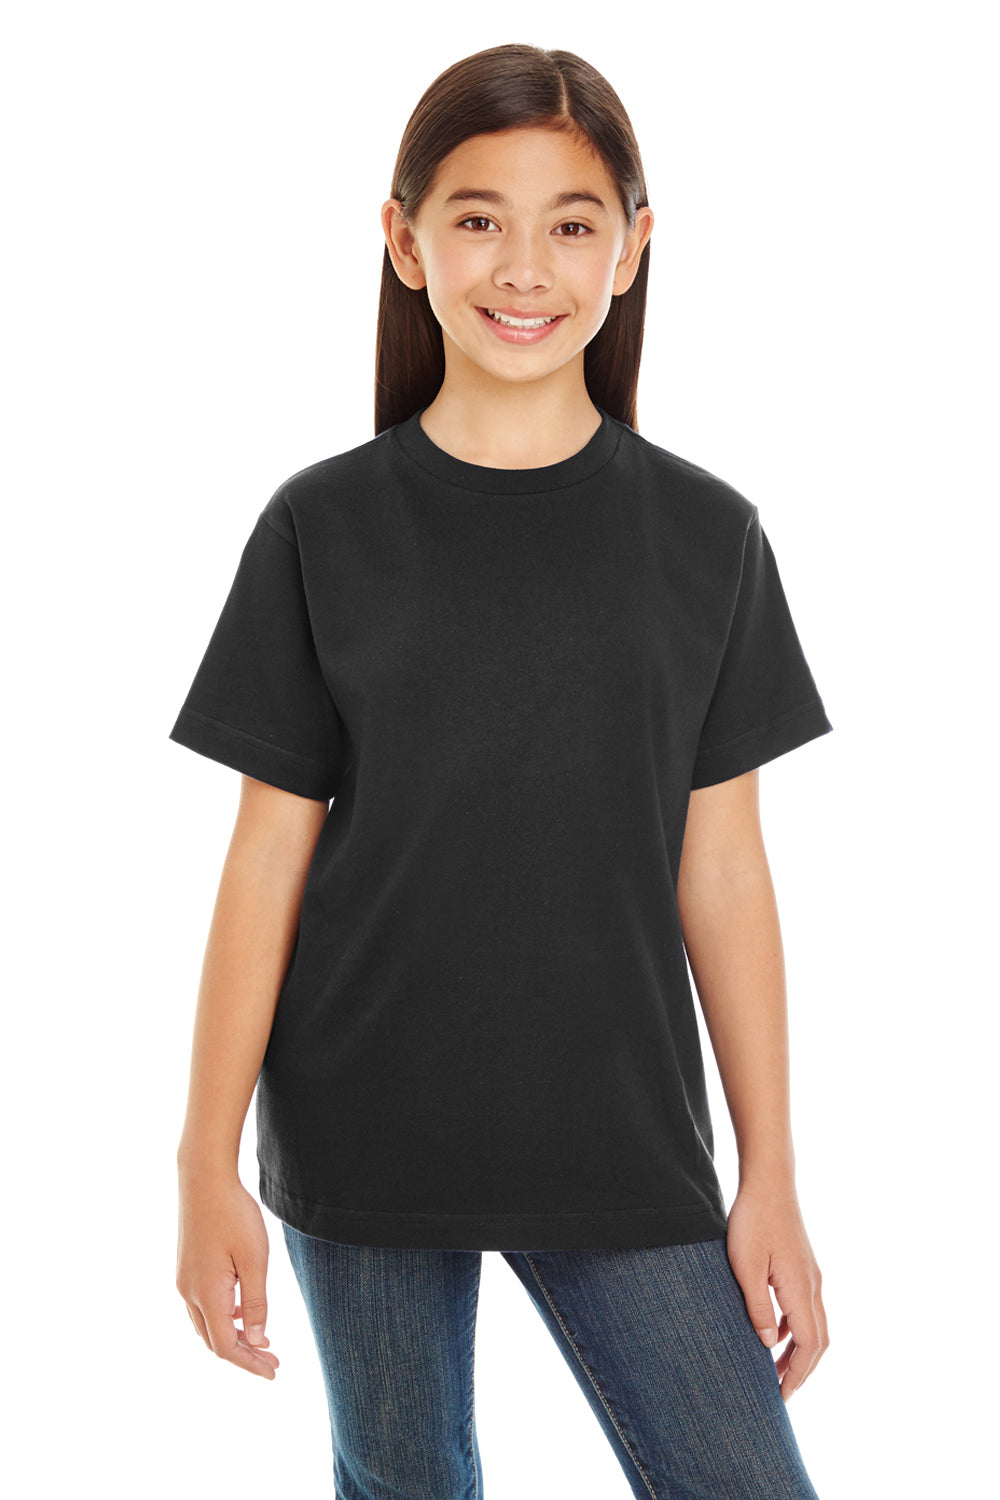 LAT 6180 Youth Premium Jersey Short Sleeve Crewneck T-Shirt Black Front